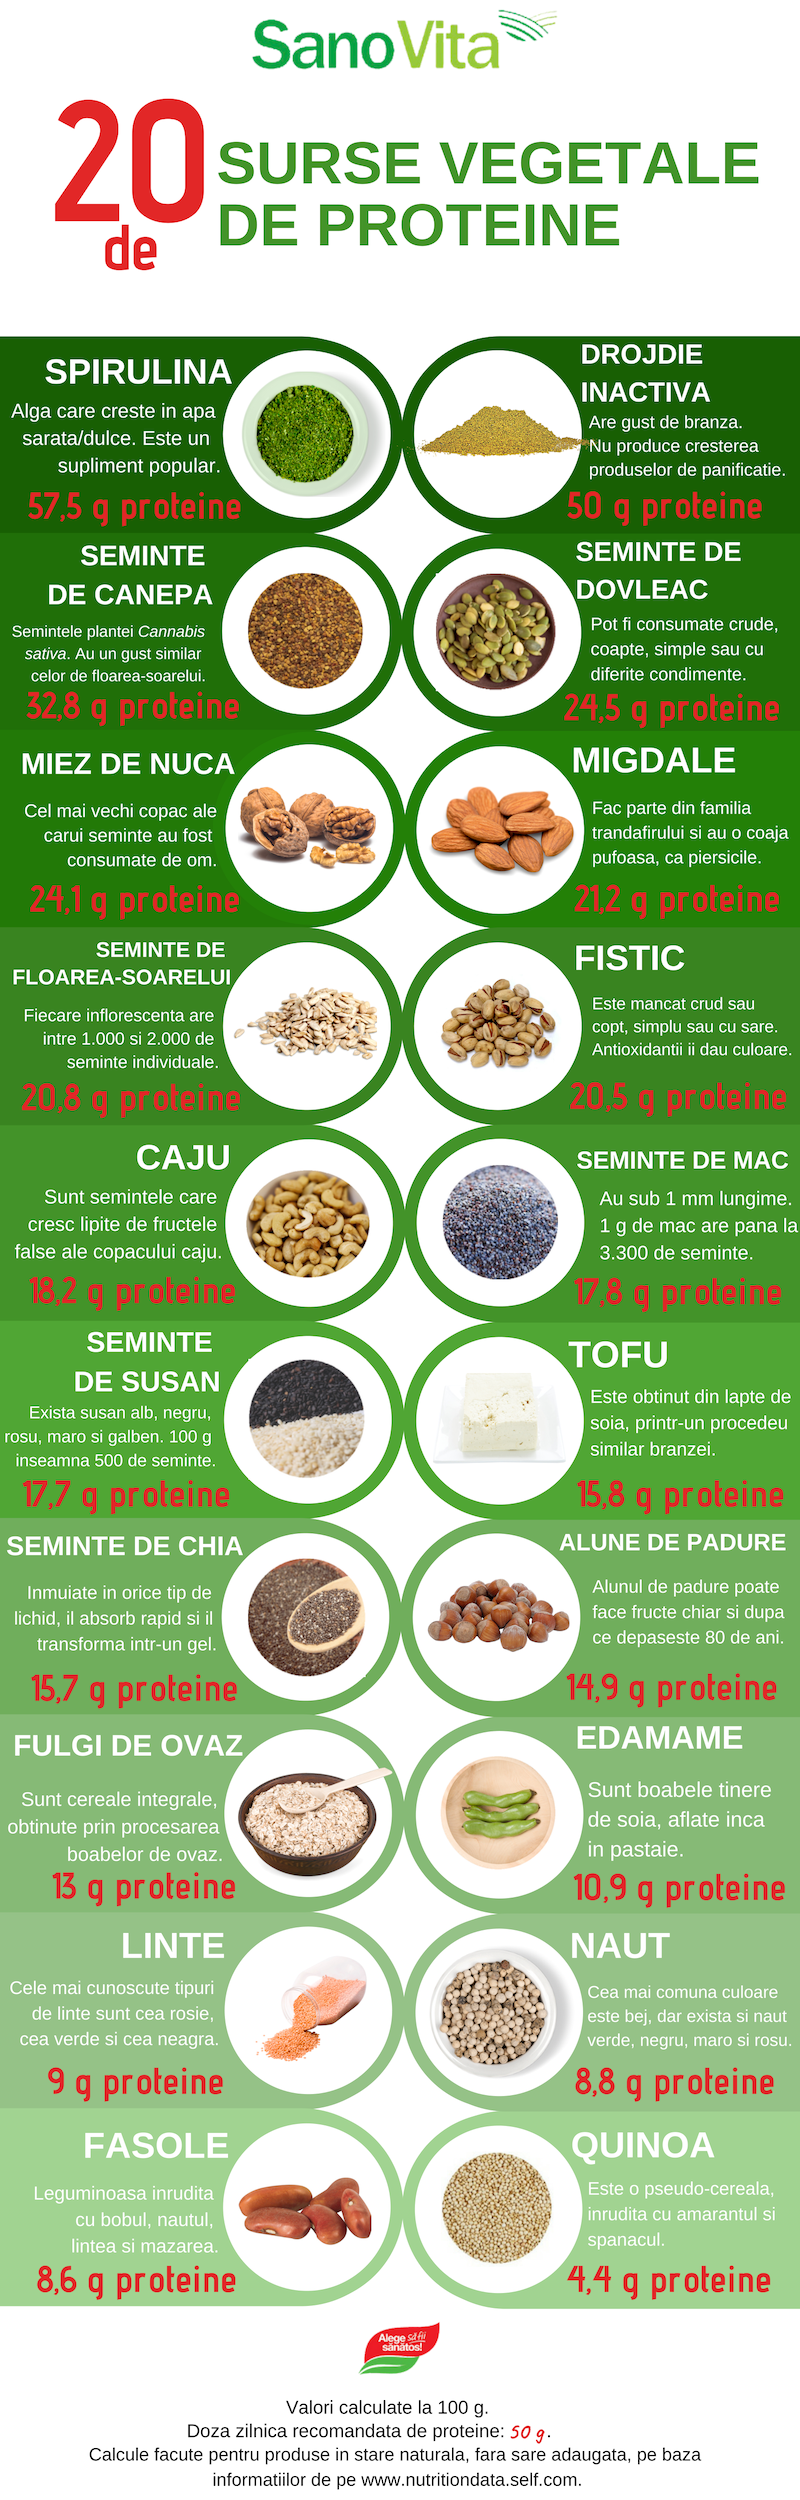 8 surse sanatoase de proteine vegetale